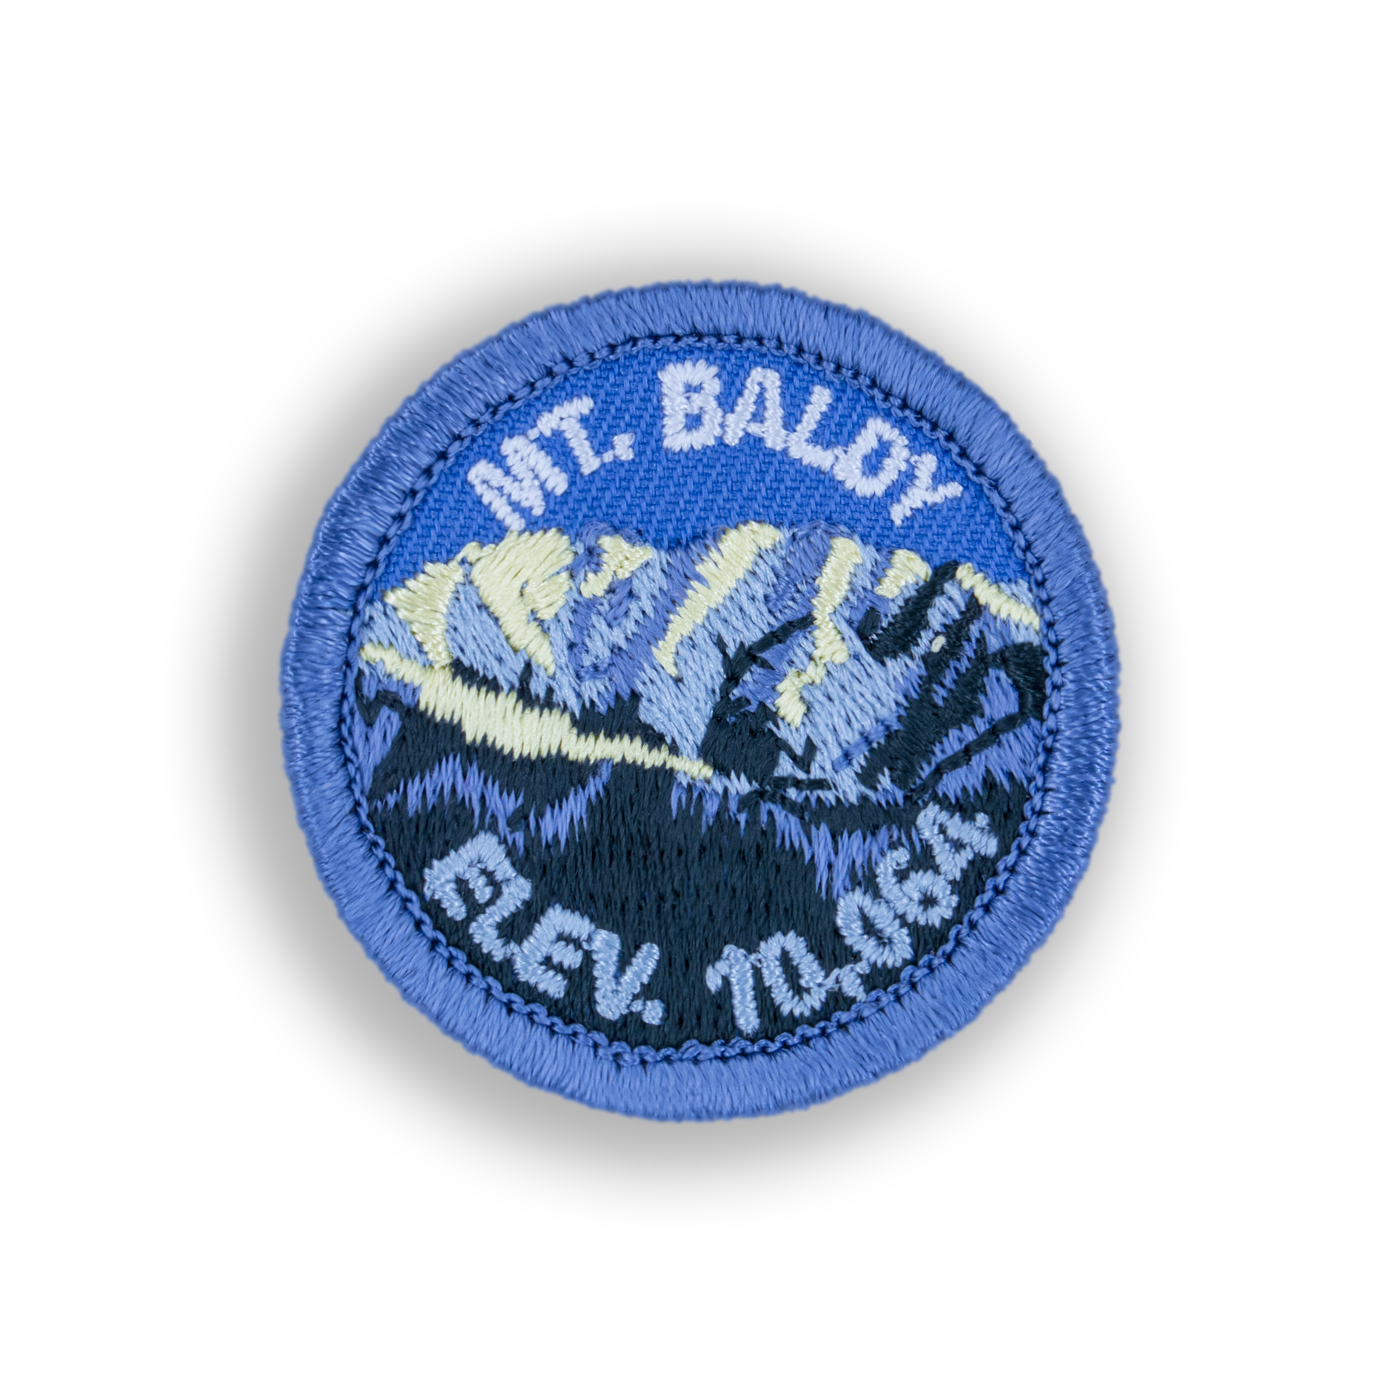 Mount Baldy Patch | Demerit Wear - Fake Merit Badges